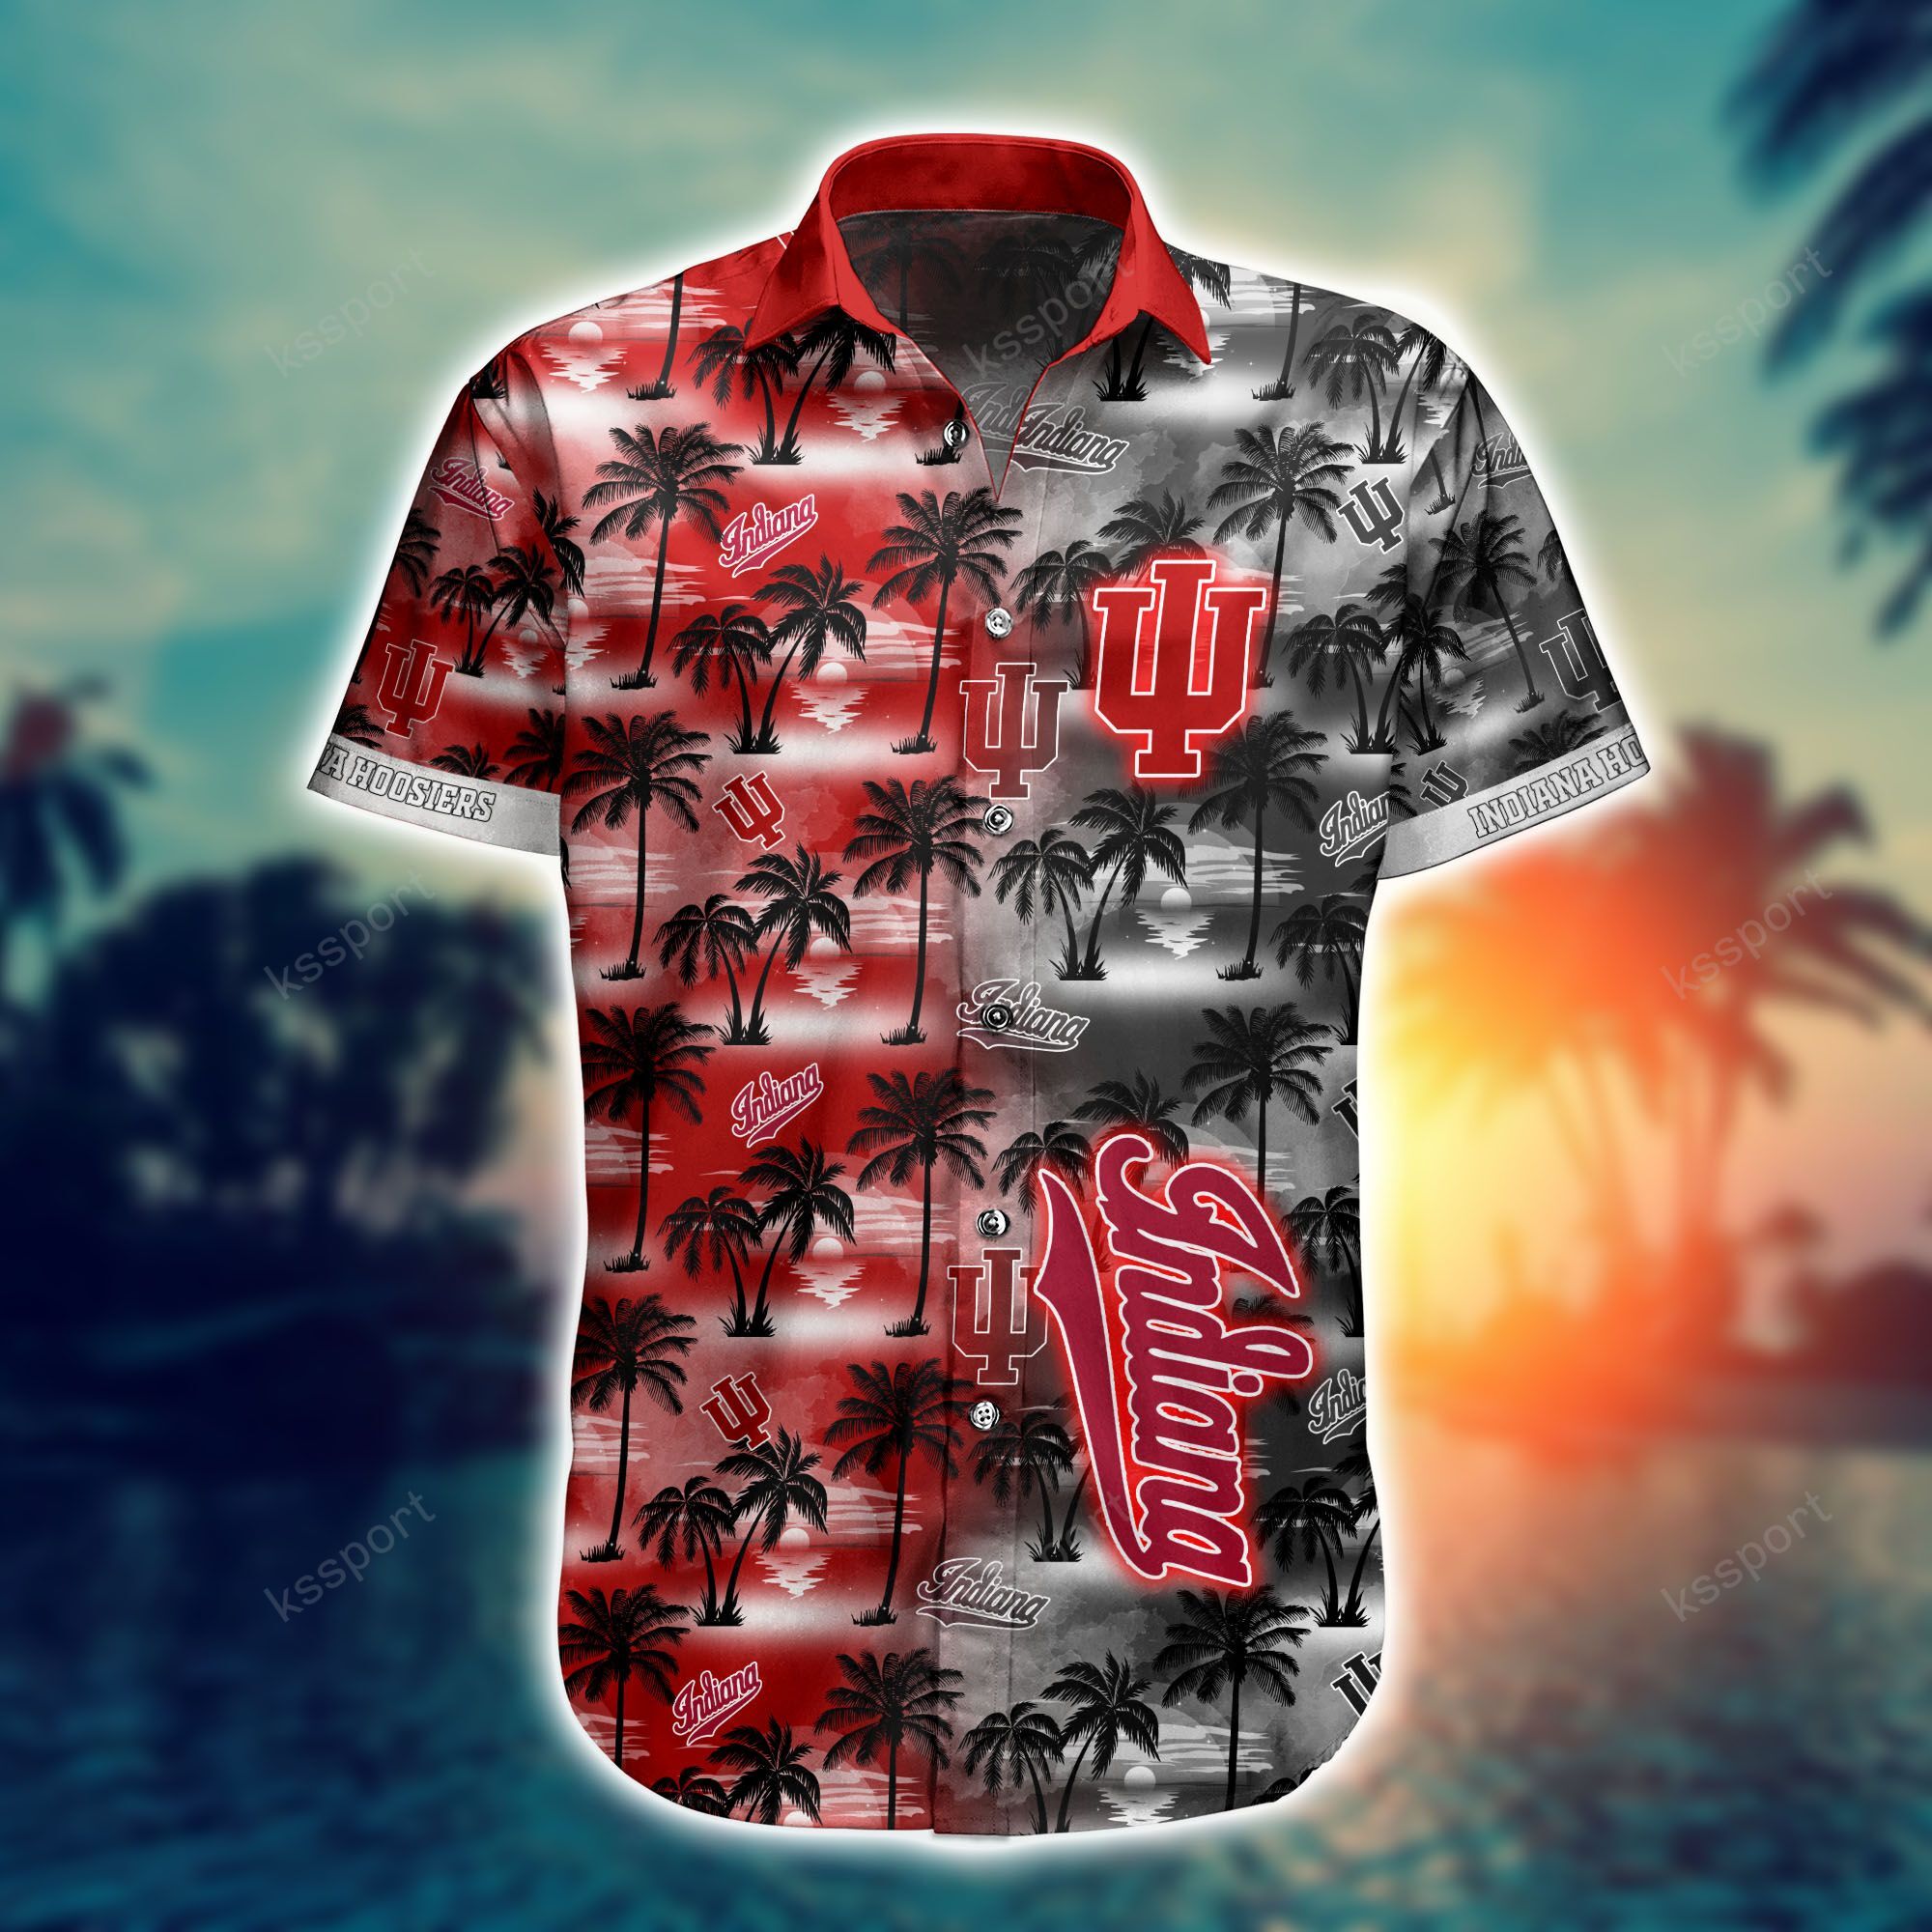 Hawaiian shirt and shorts is a great way to look stylish at a beach party 68